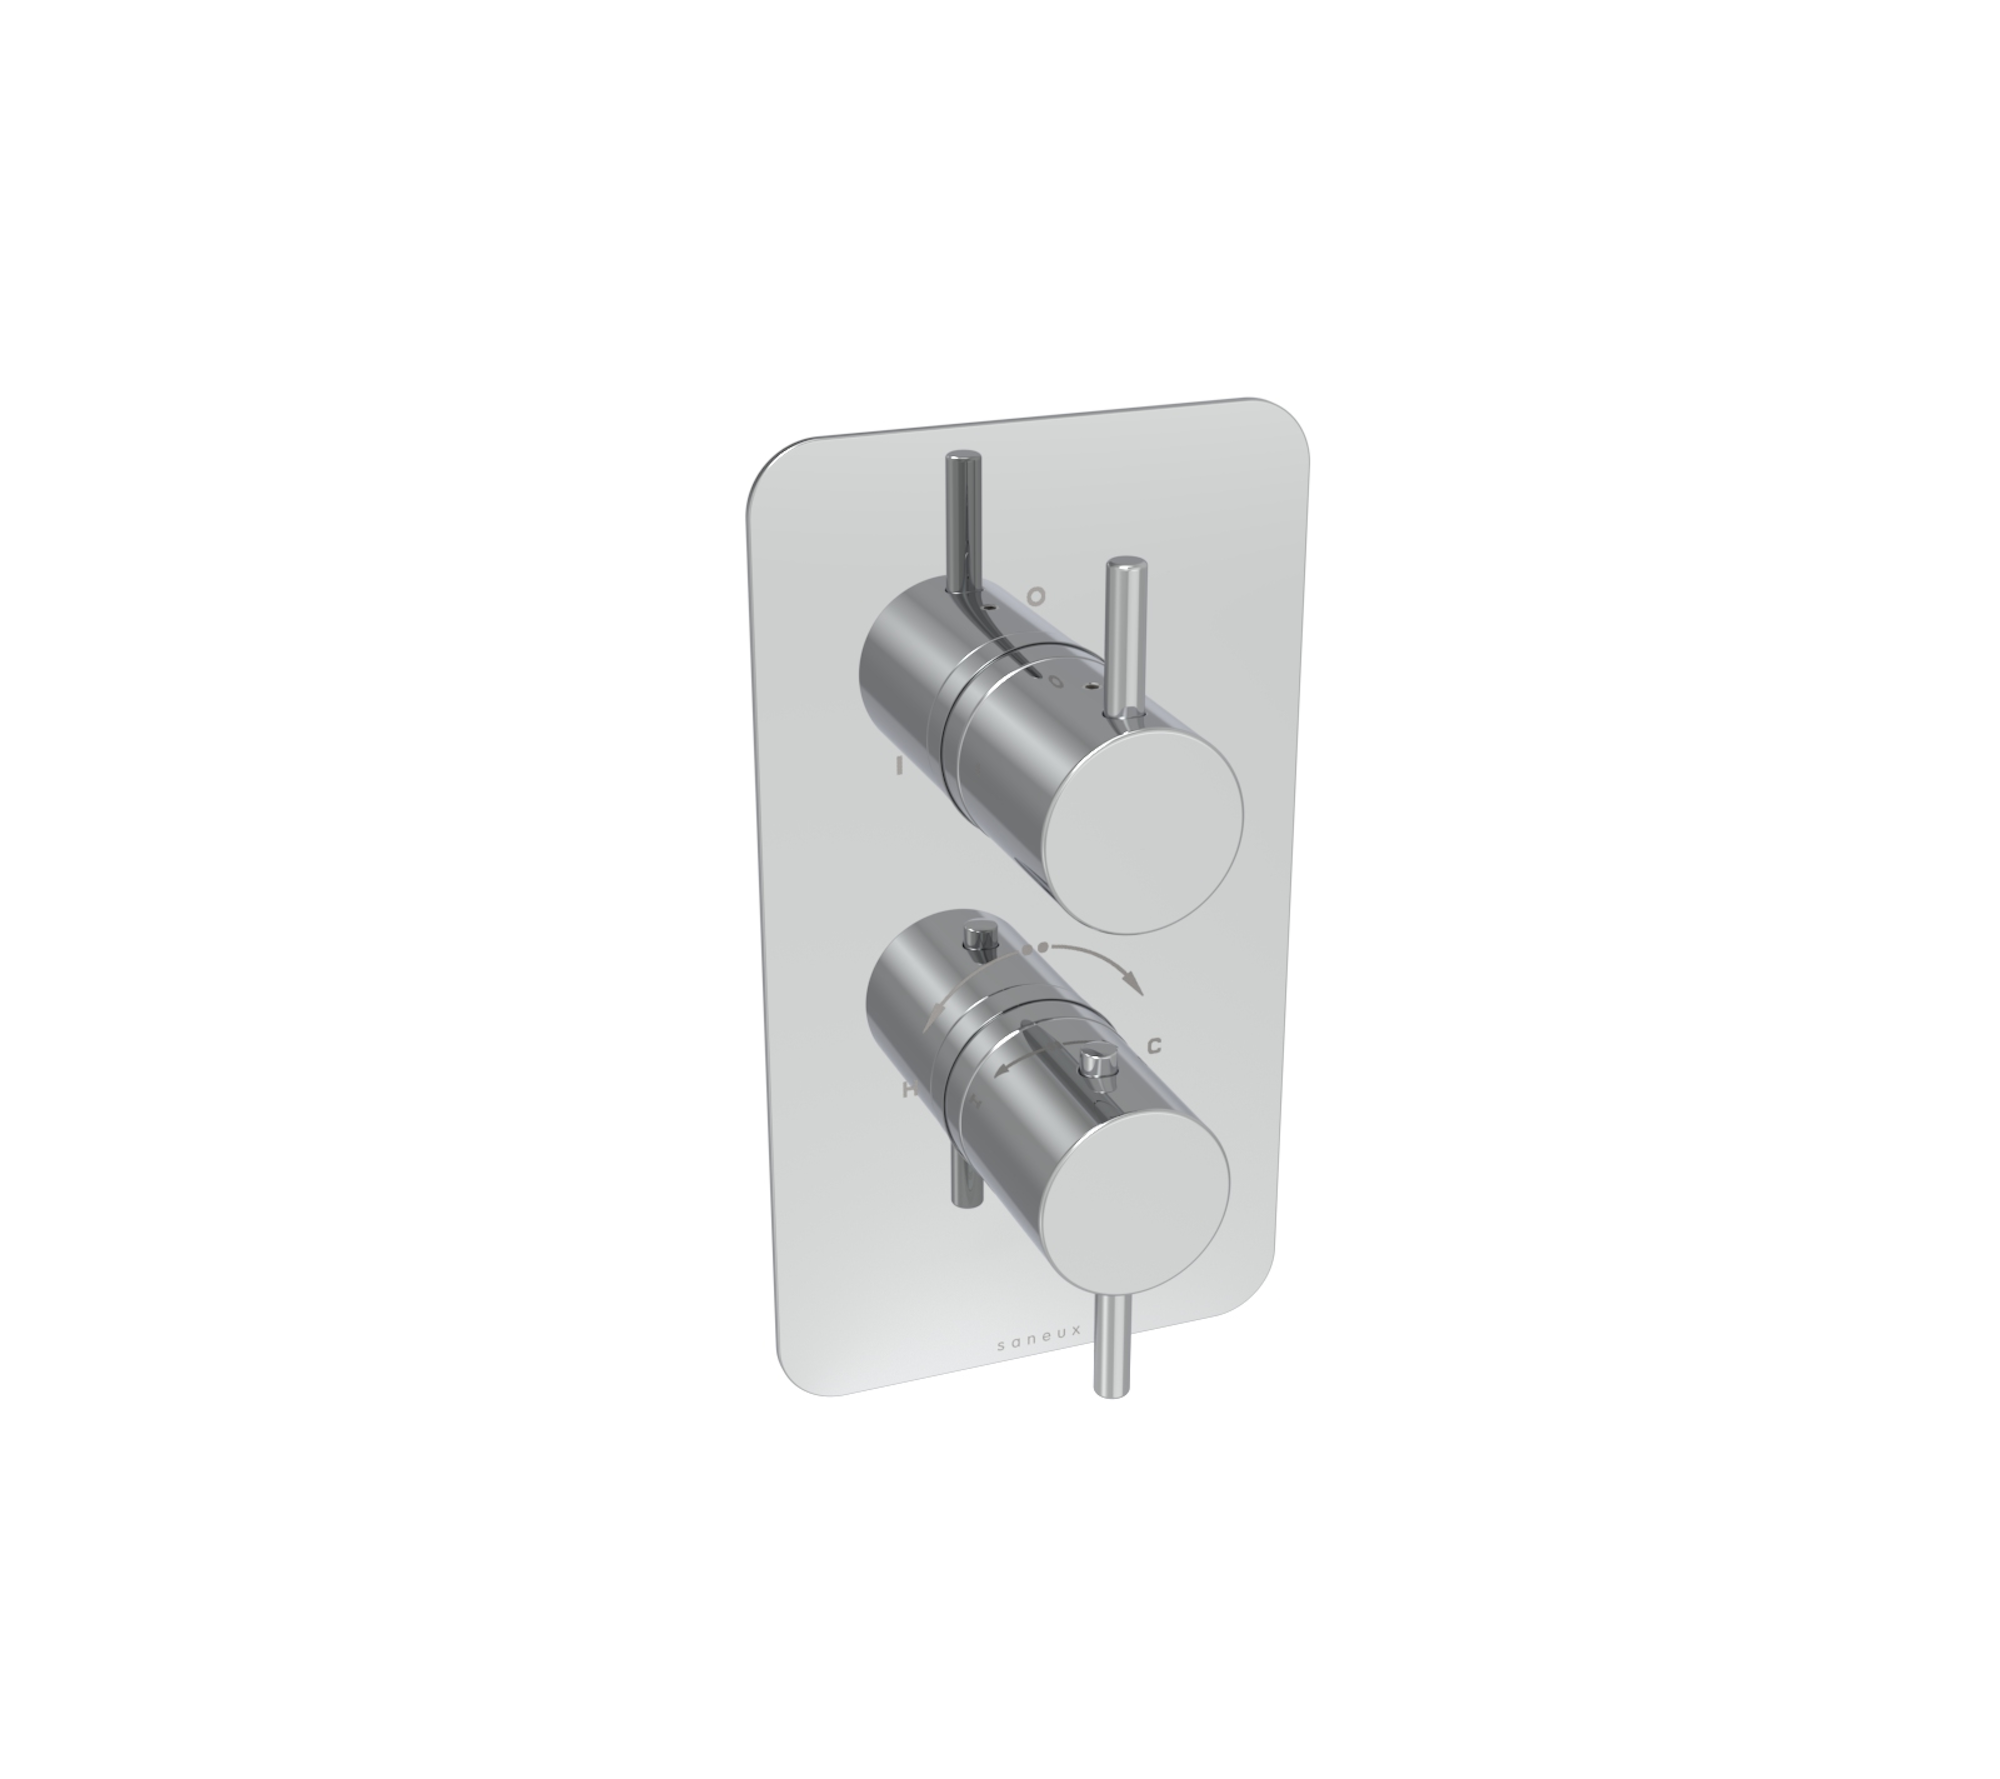 COS 2 way thermostatic shower valve kit - Chrome